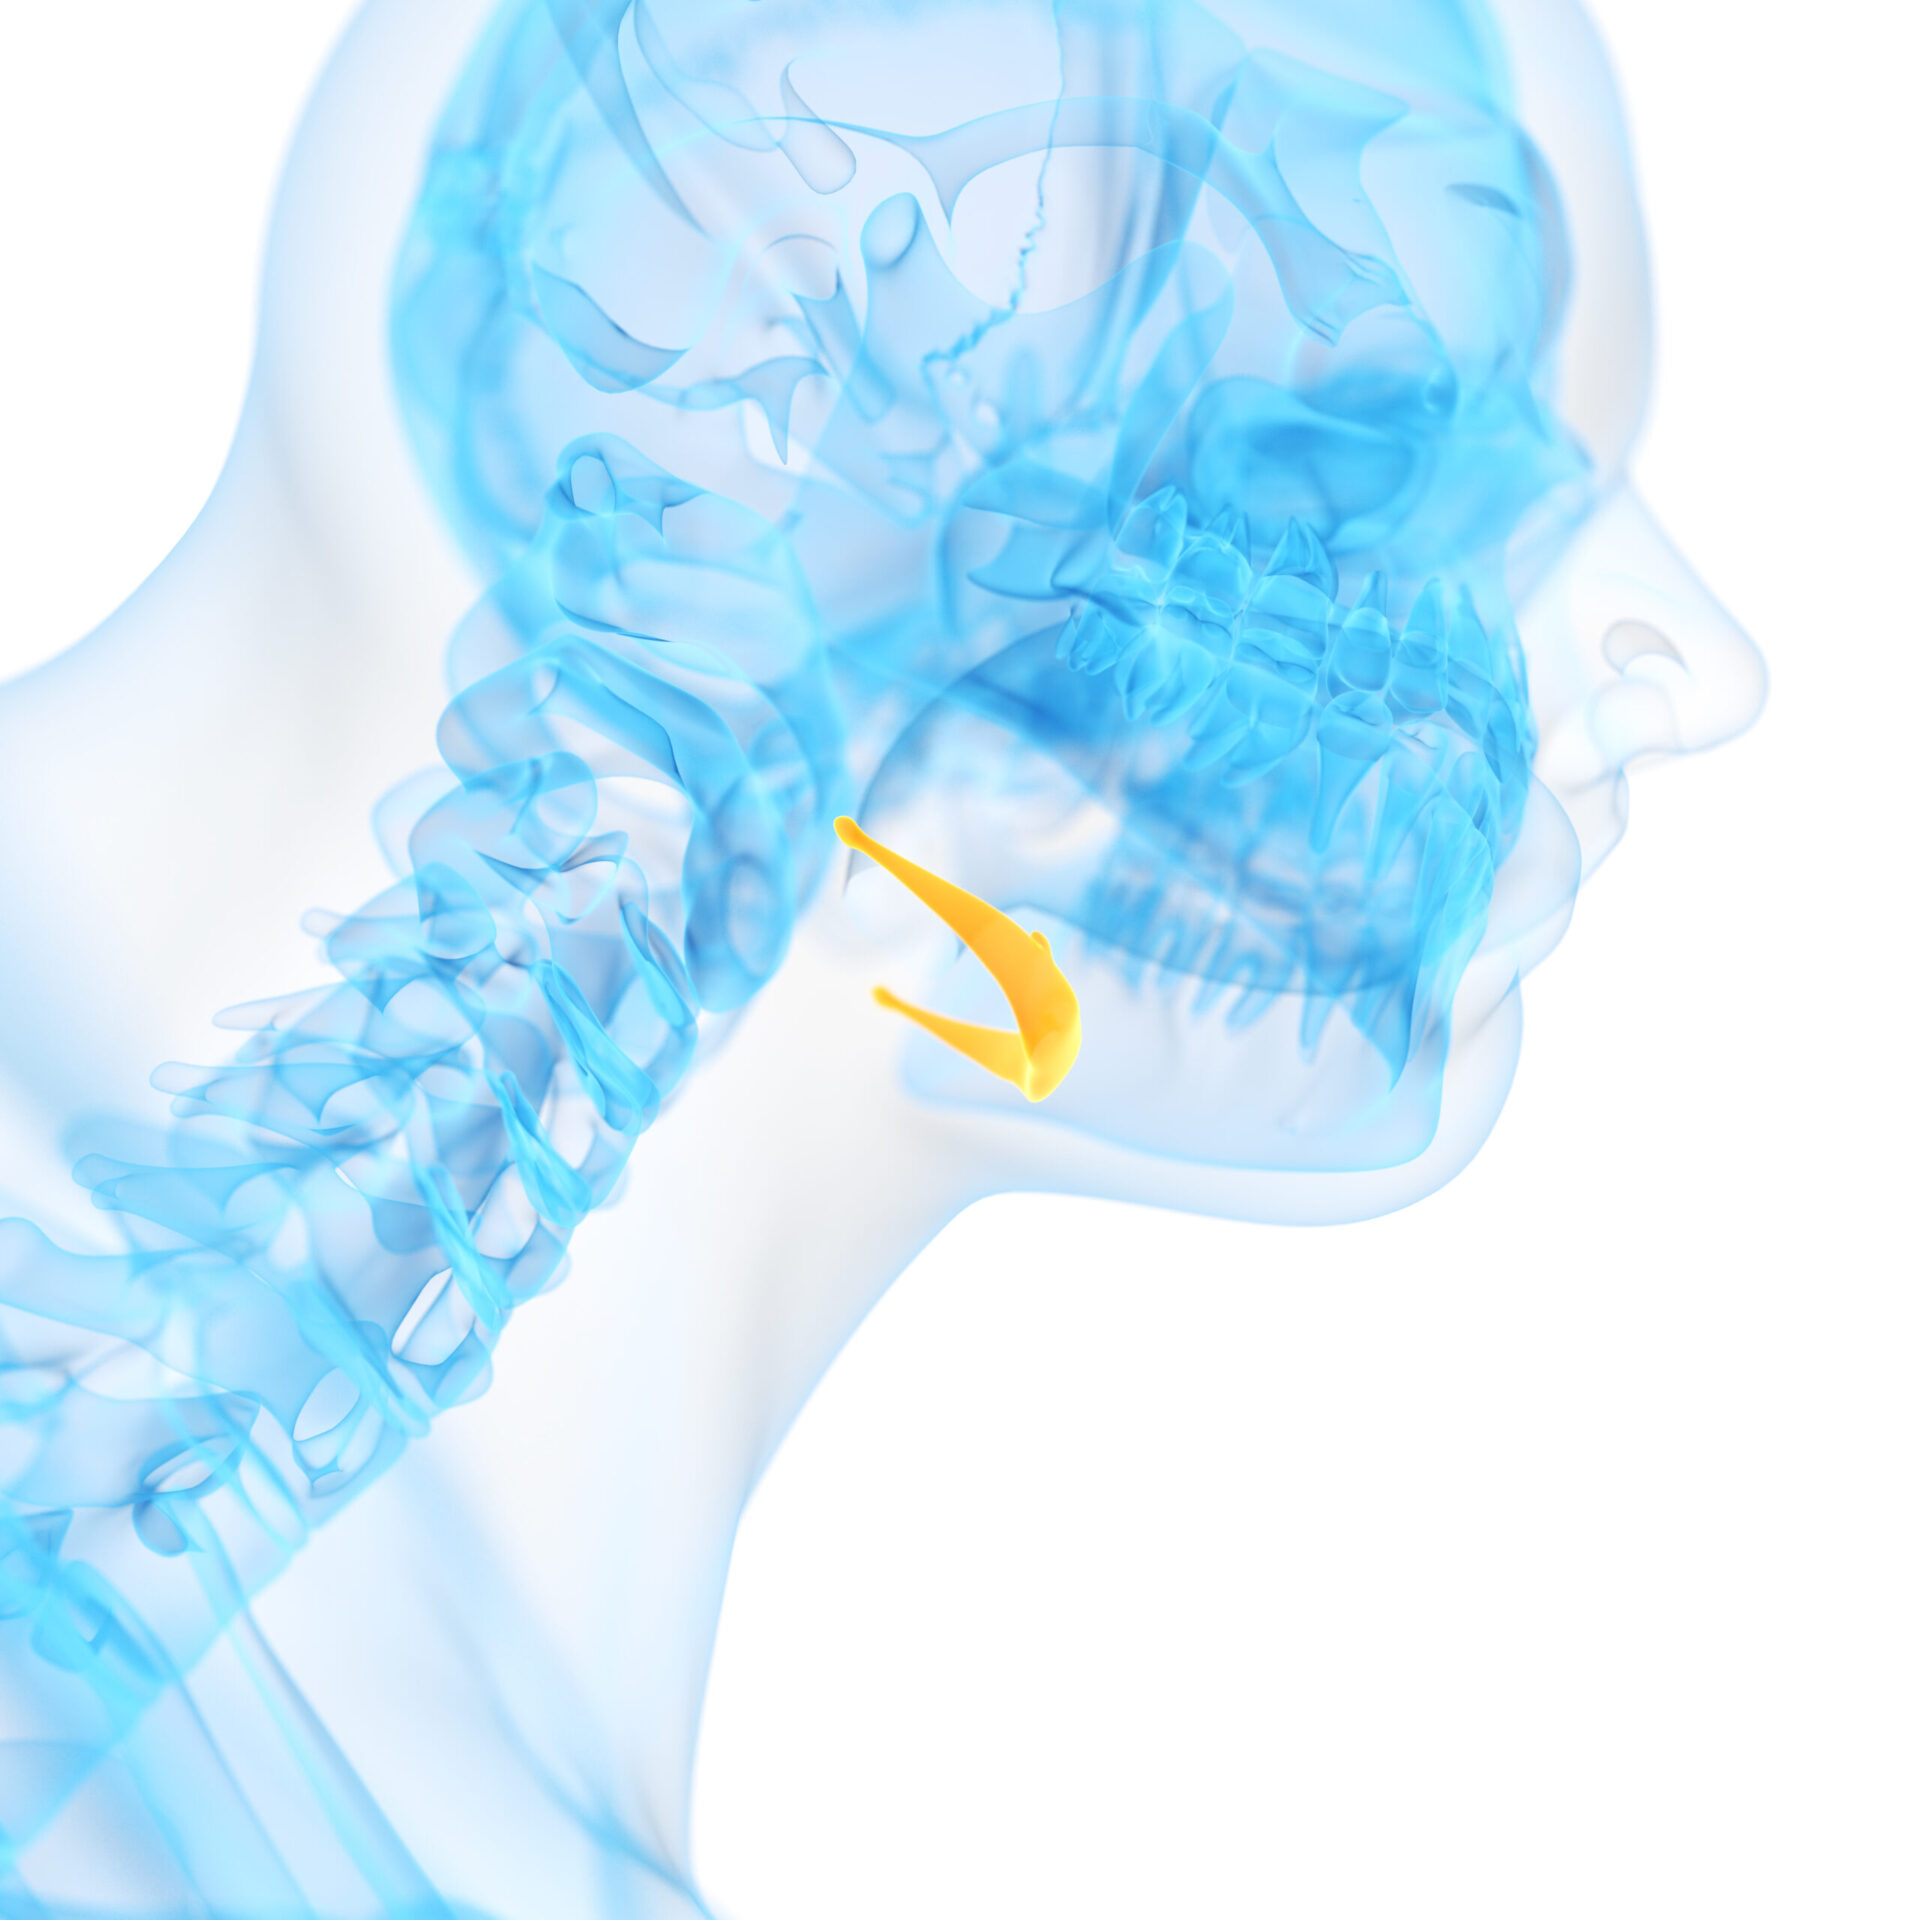 medical 3d illustration of the hyoid bone